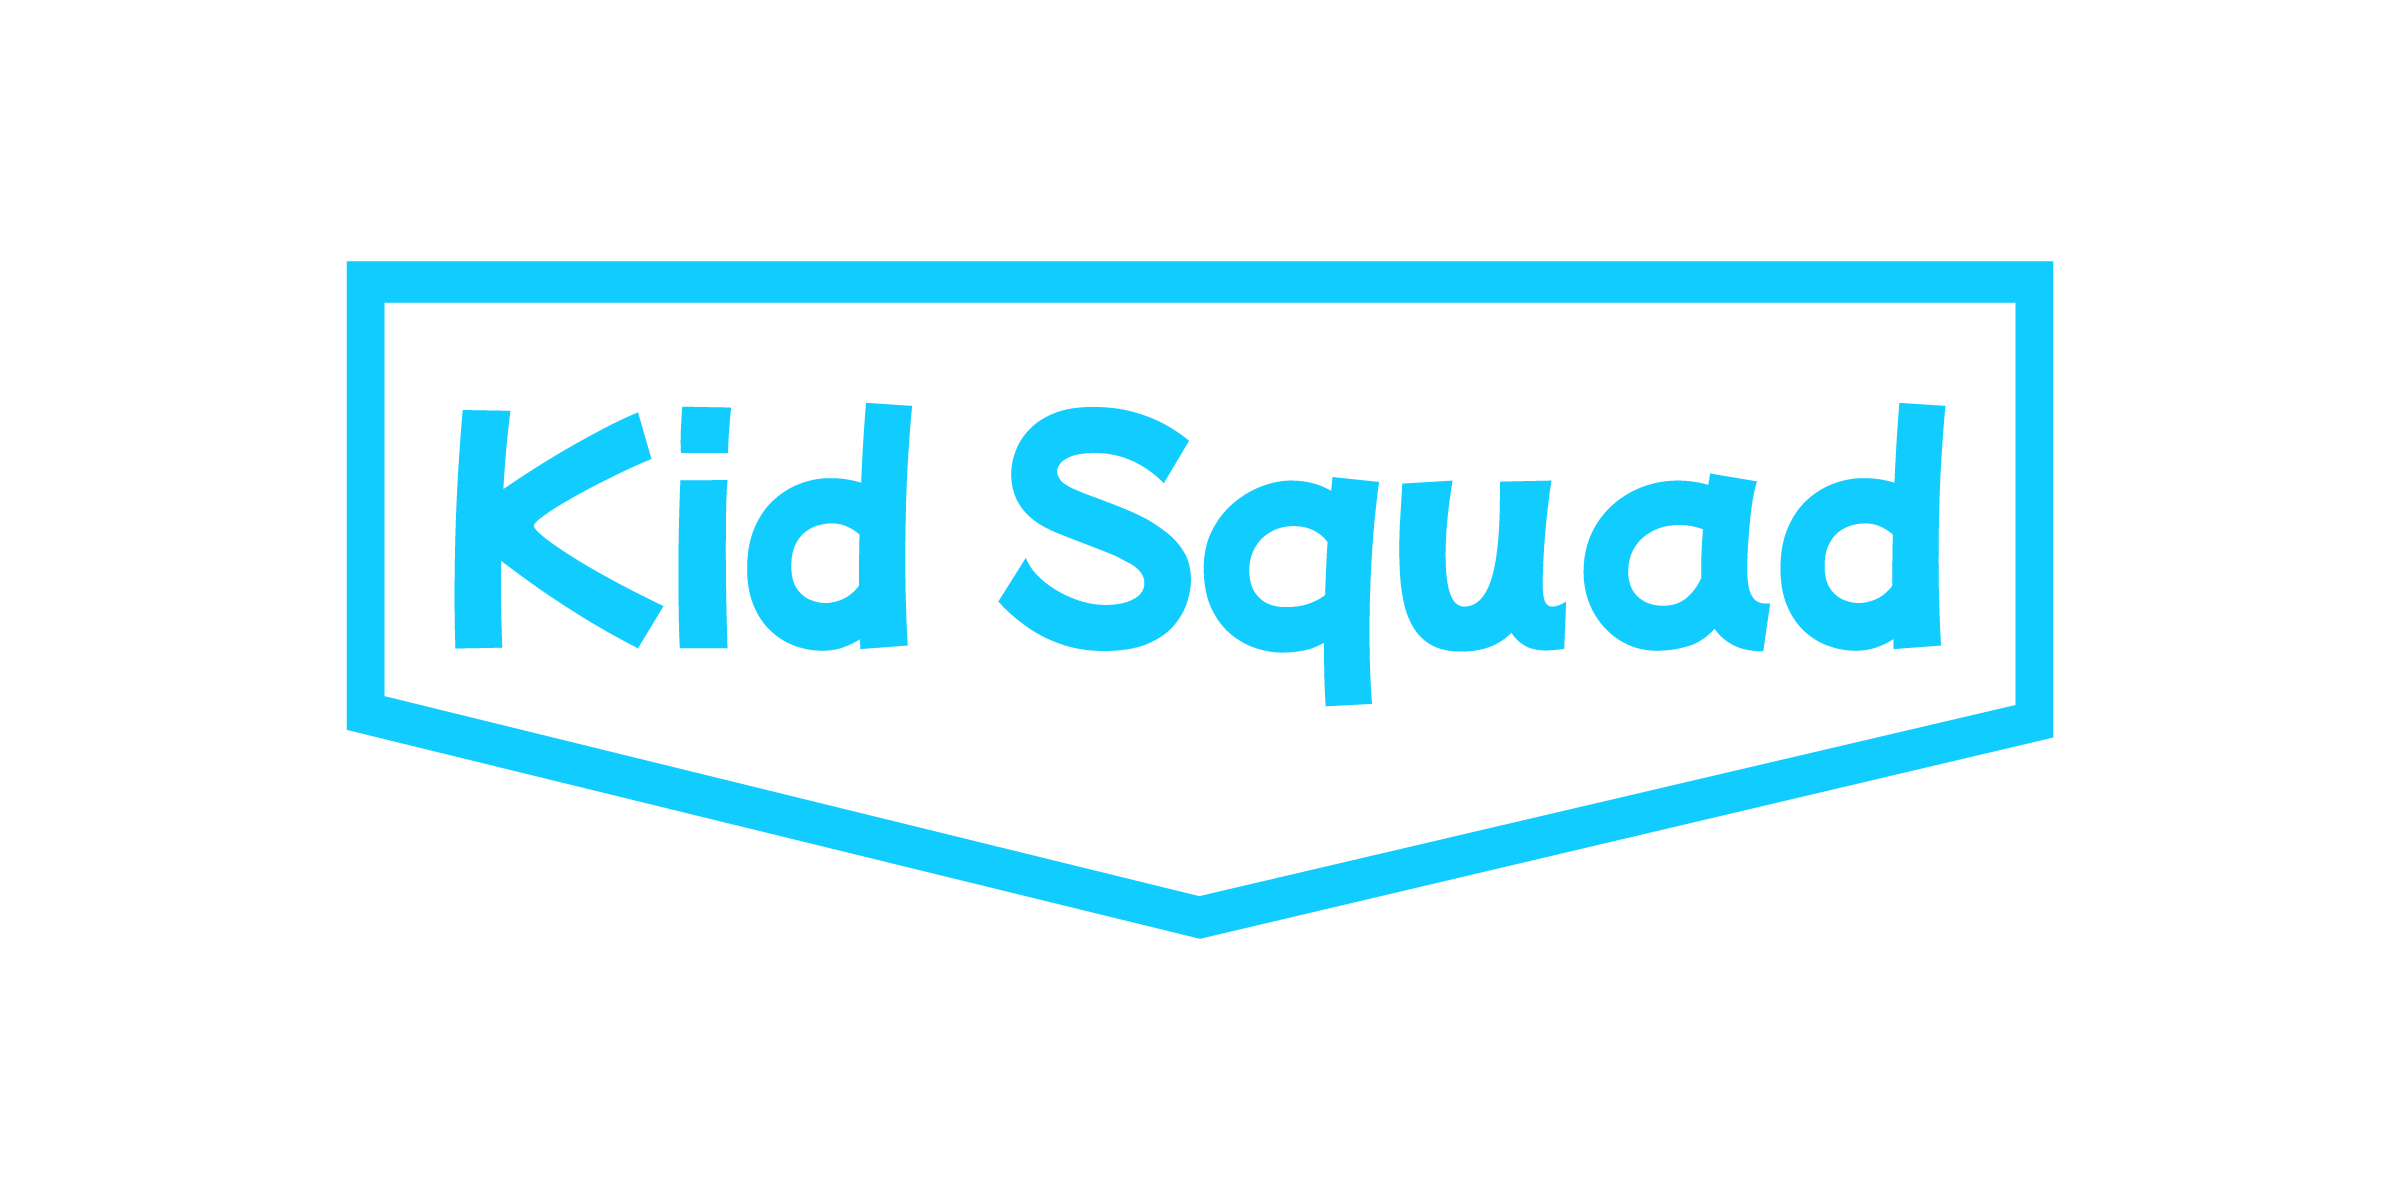 Kid Squad